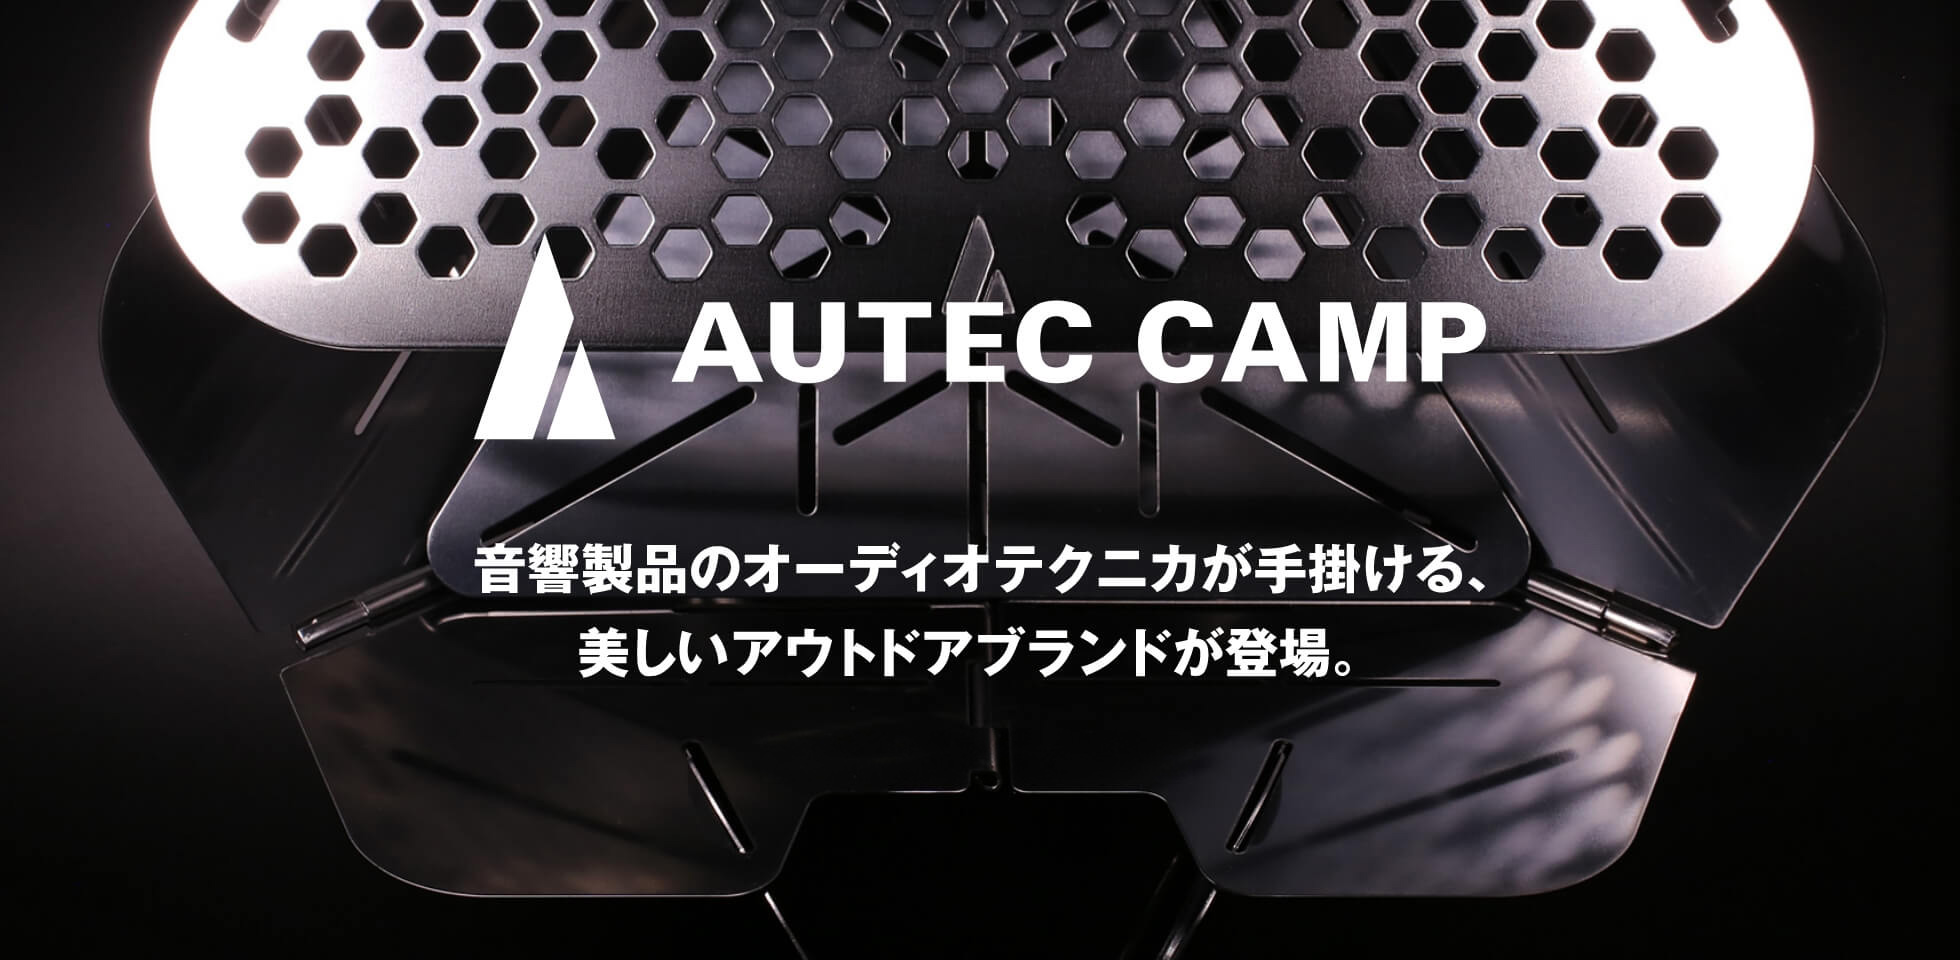 AUTEC CAMP(オーテックキャンプ)